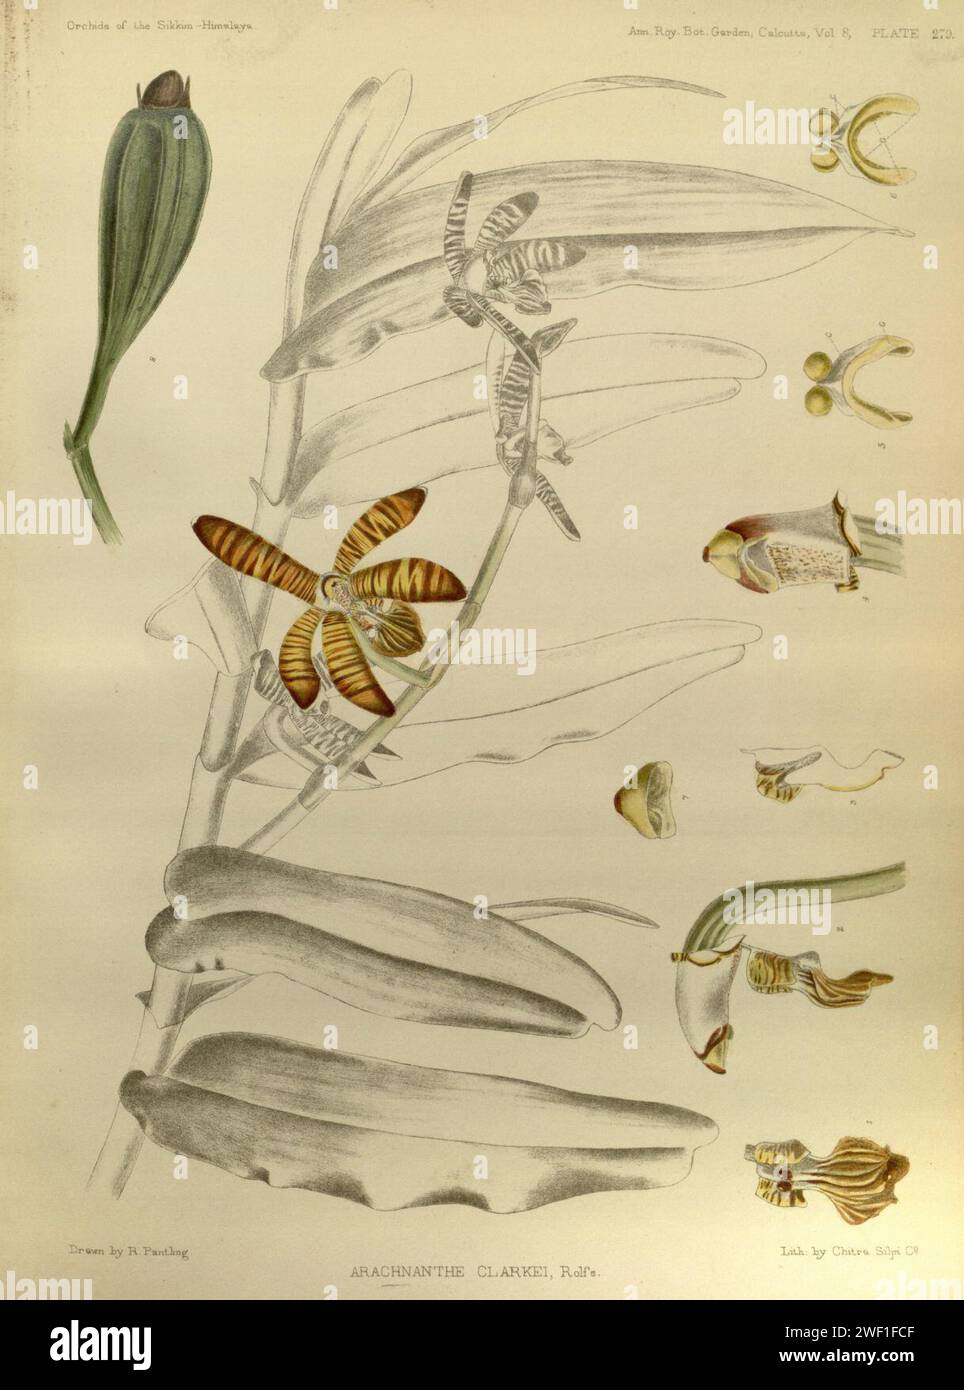 Arachnis clarkei (as Arachnanthe clarkei) - The Orchids of the Sikkim-Himalaya pl 279 (1898). Stock Photo